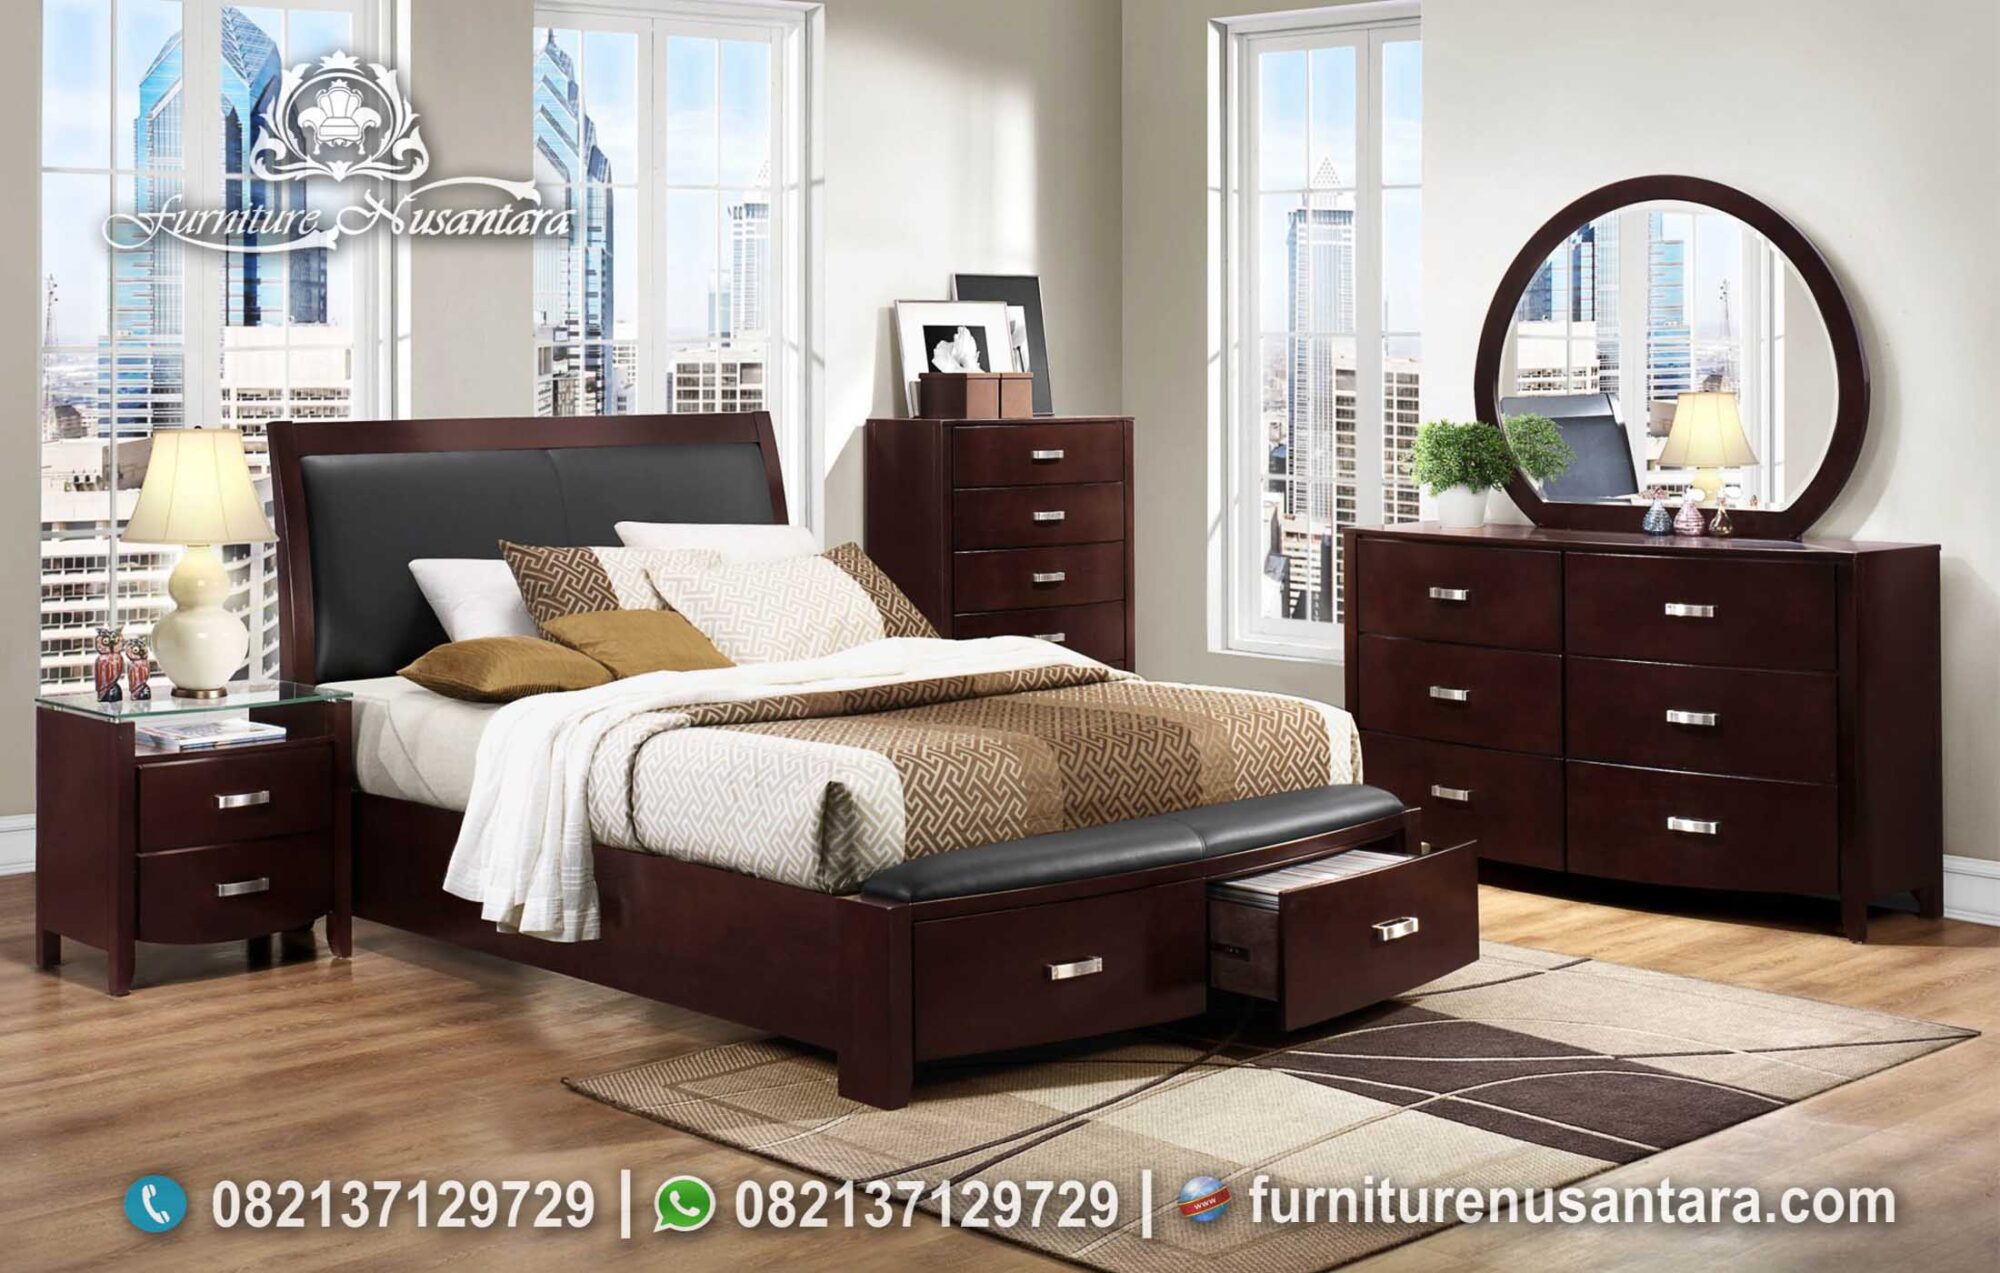 Desain Kamar Apartemen Modern KS-108, Furniture Nusantara